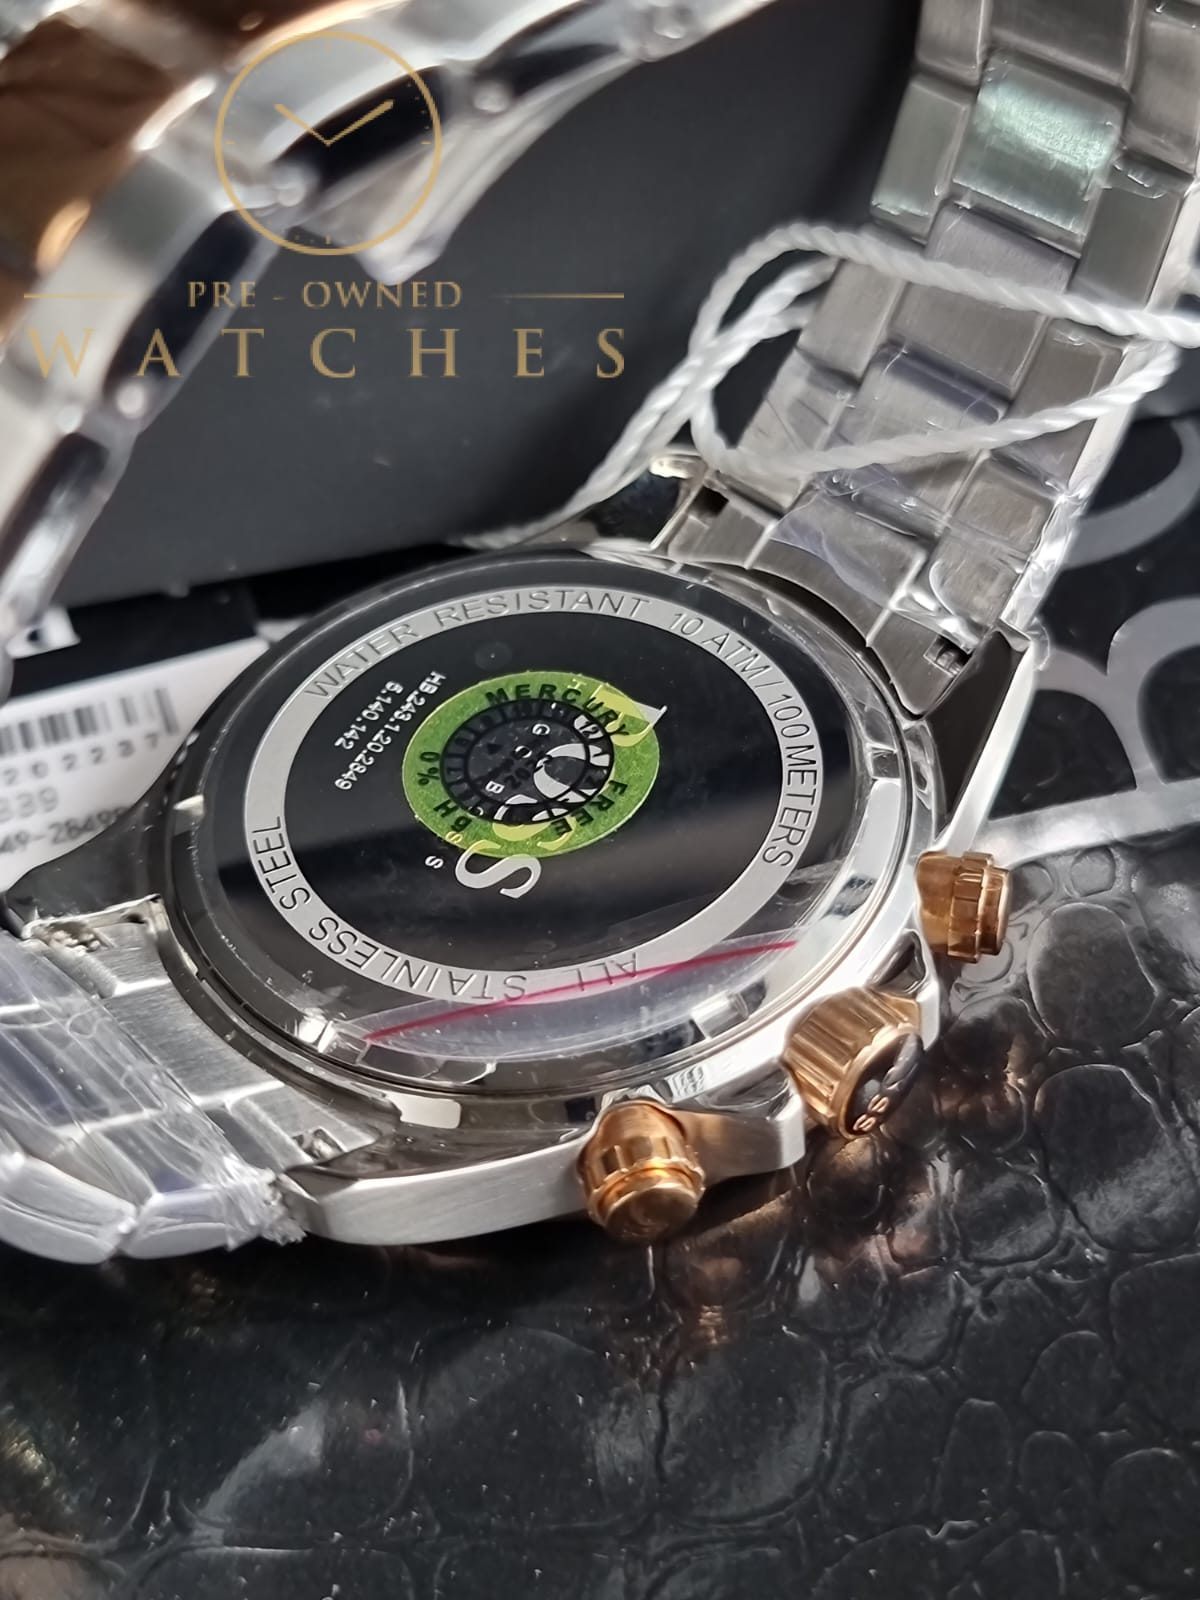 Hugo Boss Men’s Two-Tone Rose Gold Silver Watch 1513339